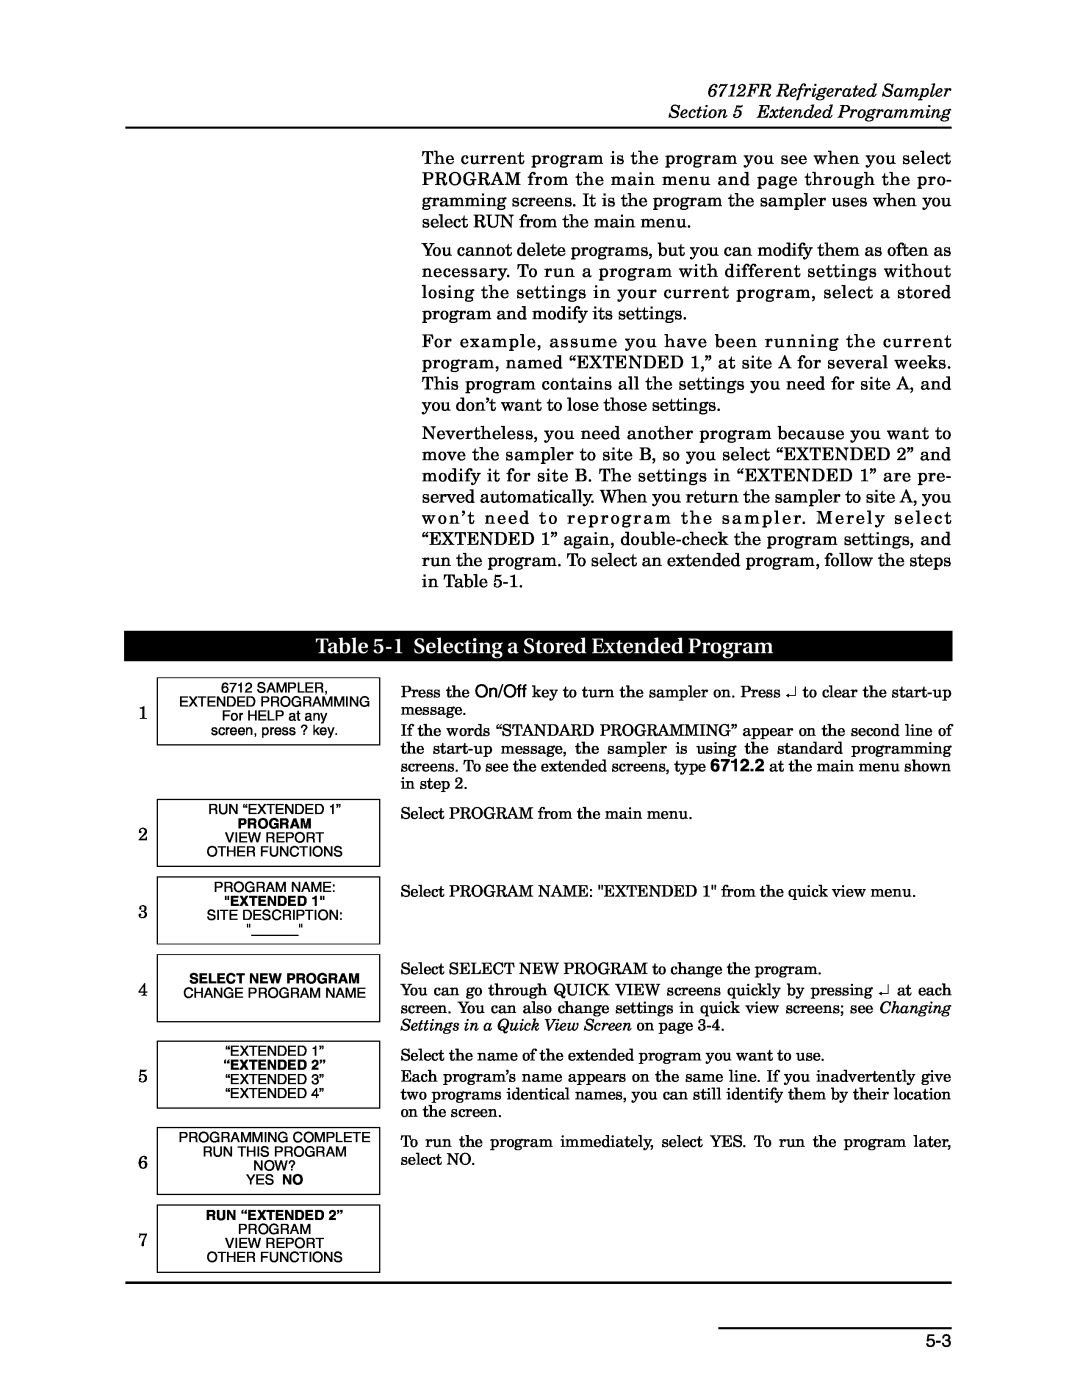 Teledyne manual 1 Selecting a Stored Extended Program, 6712FR Refrigerated Sampler Extended Programming 